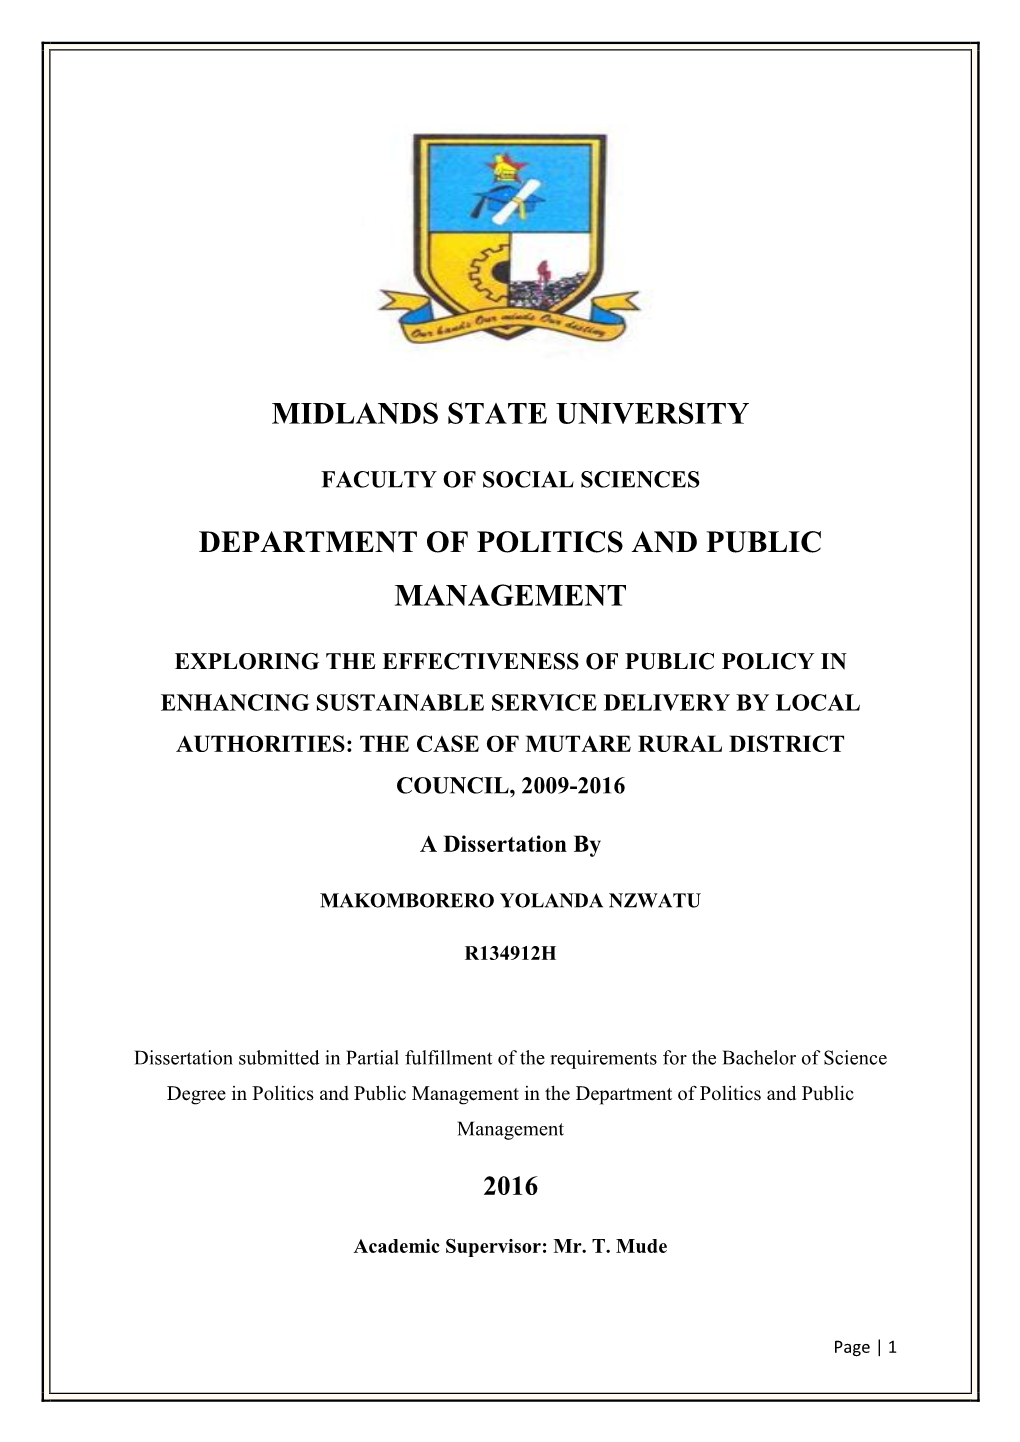 Department of Politics and Public Management